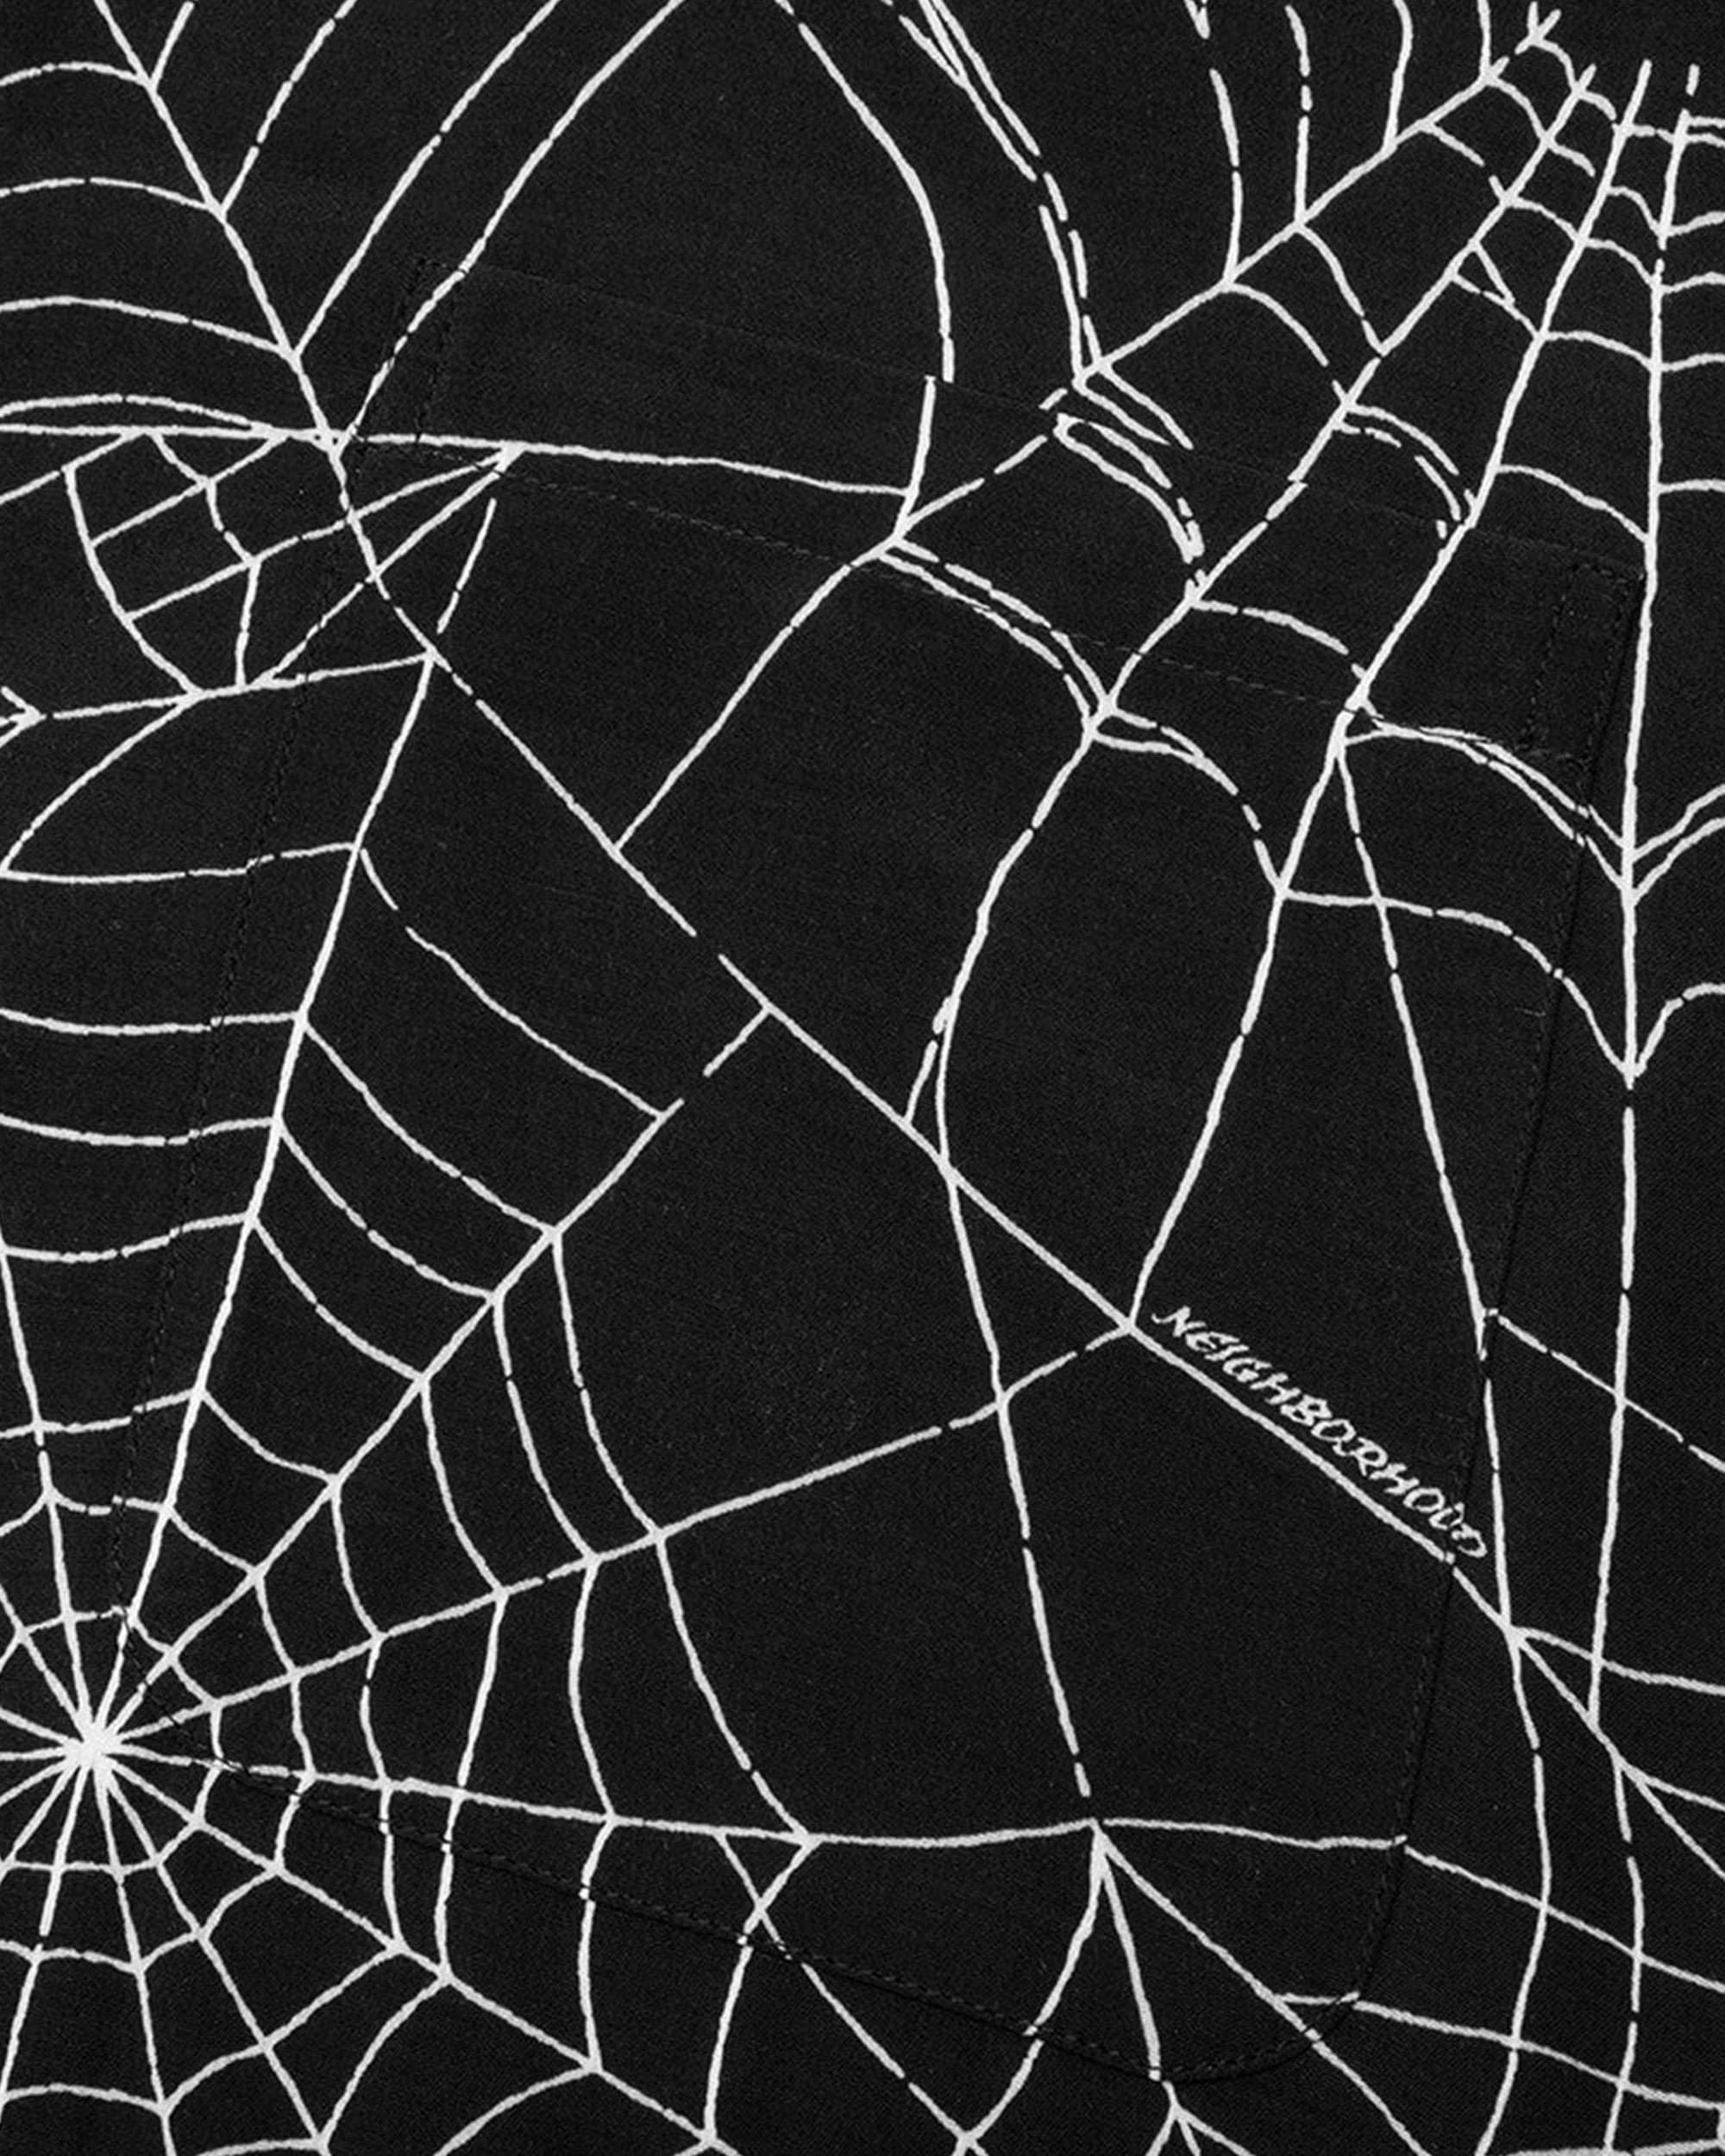 Spider Web Hawaiian S/S Shirt - Black